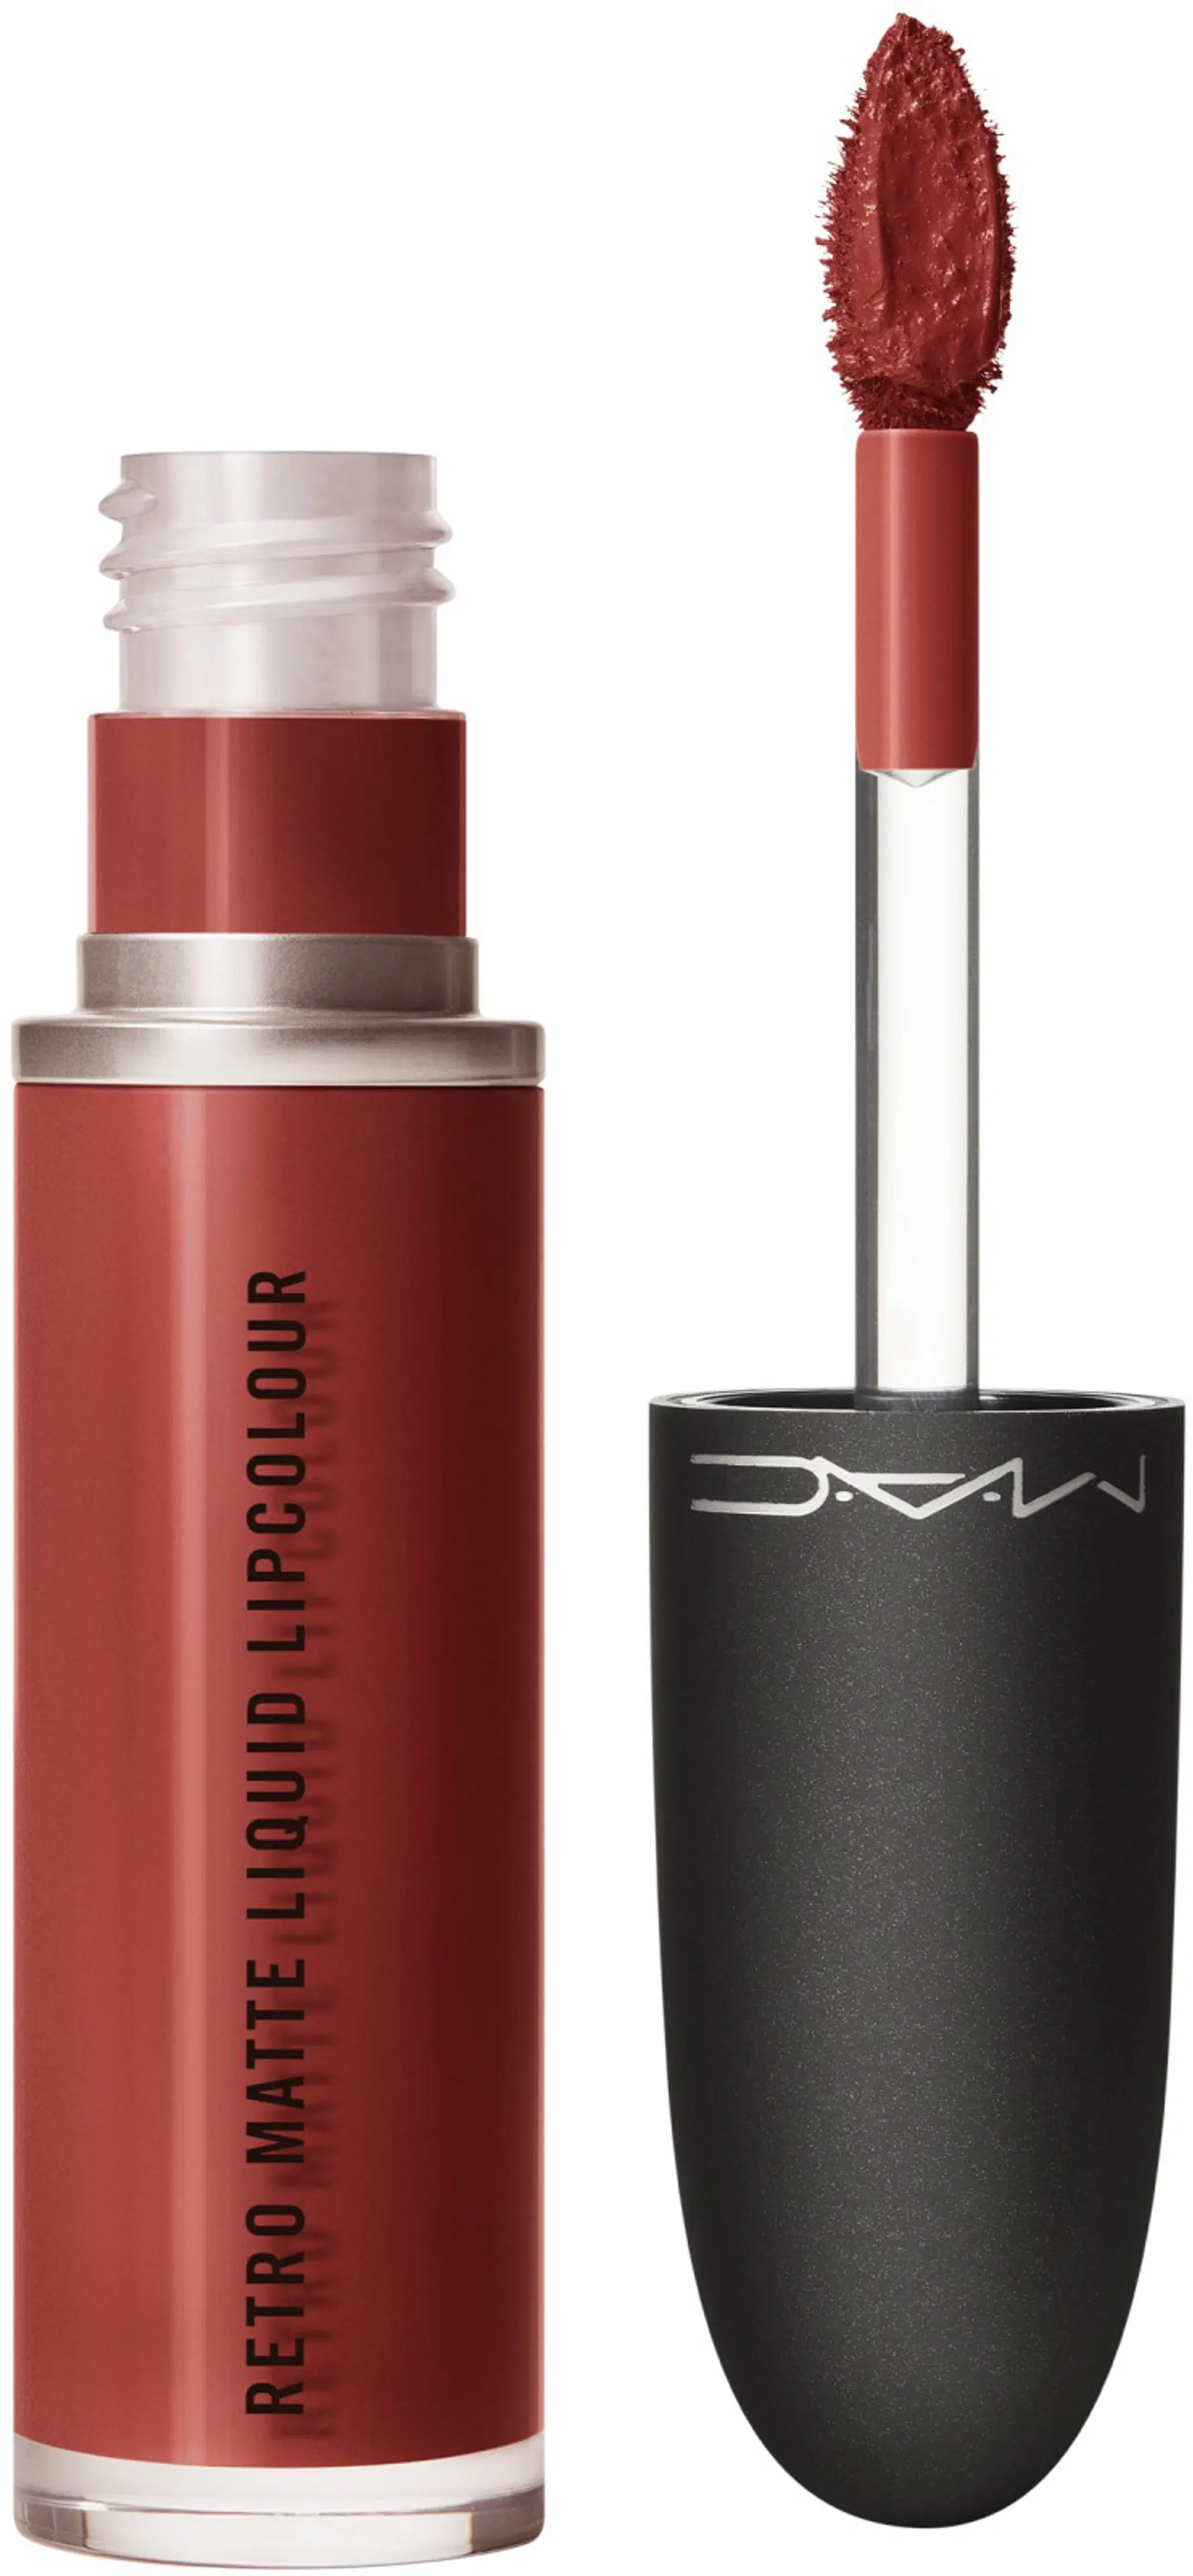 MAC Chili & Crew Retro matte liquid lip color nestemäinen huulipuna 5ml